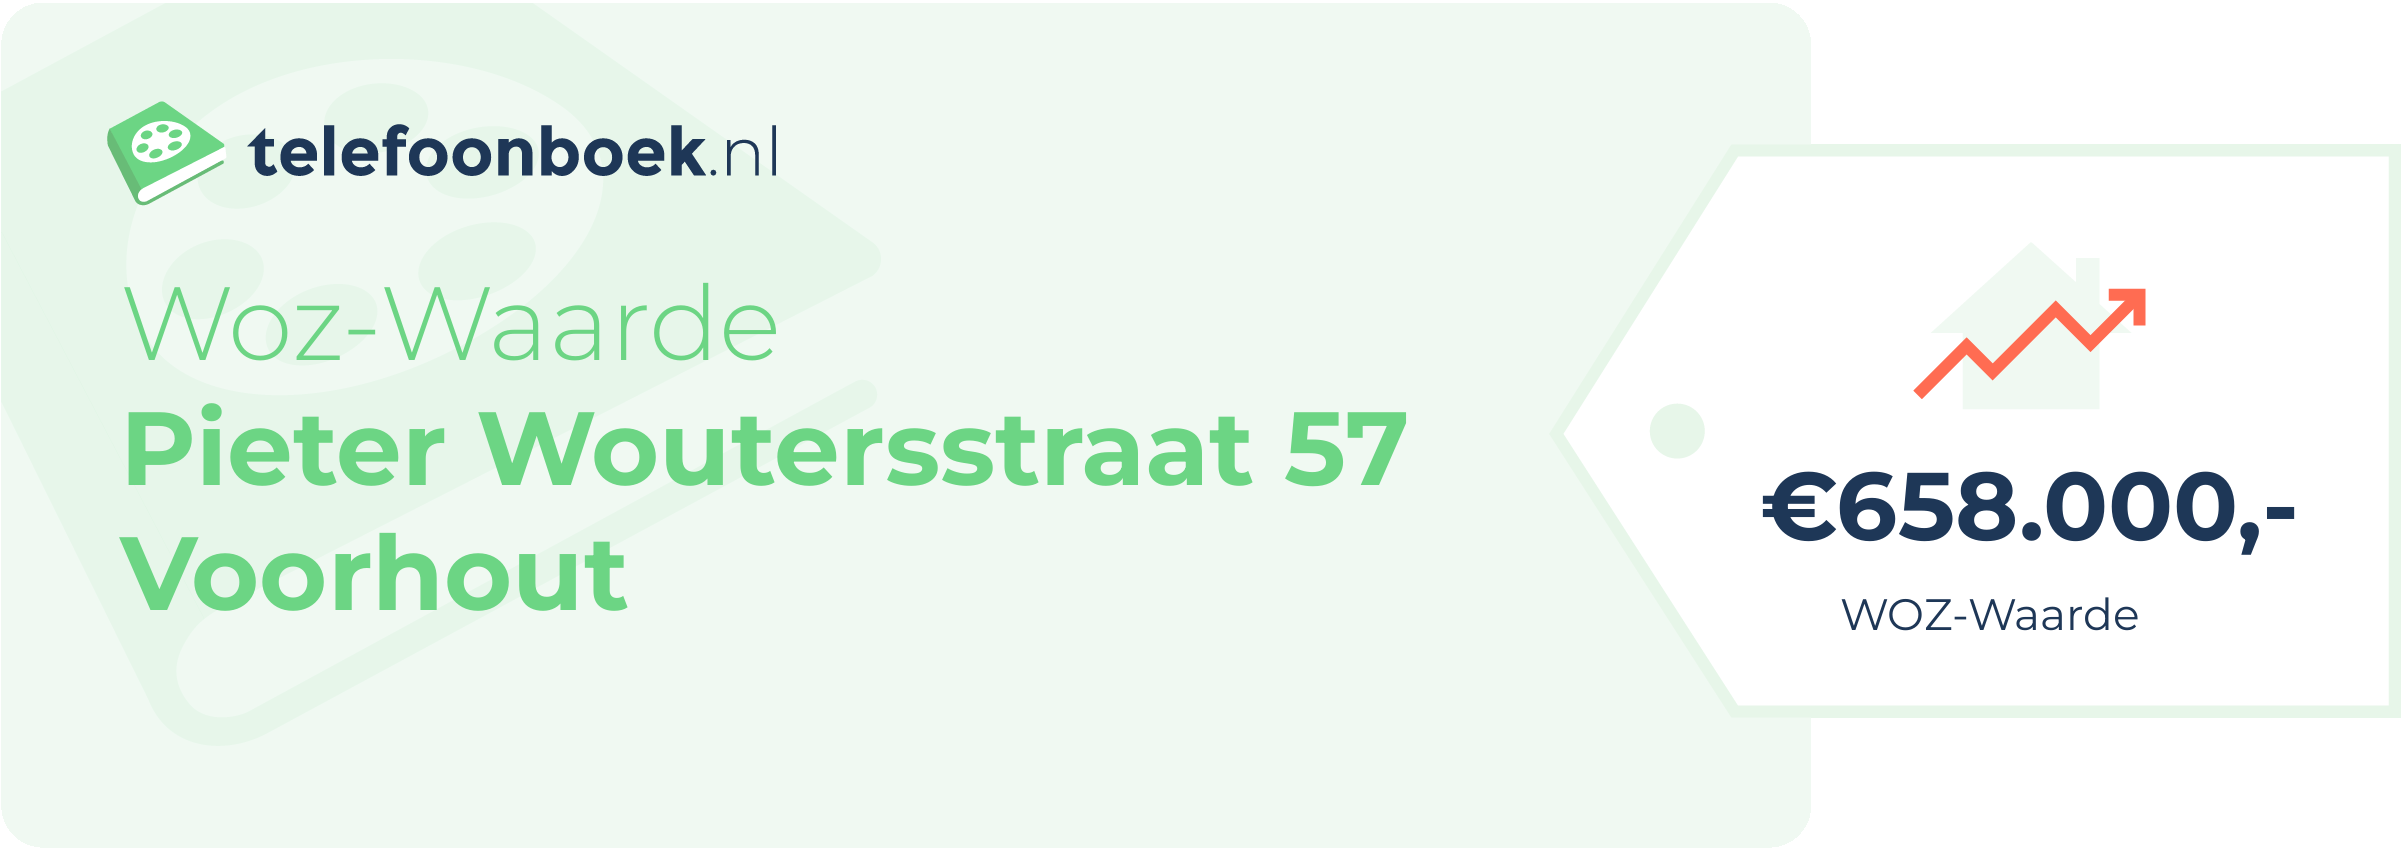 WOZ-waarde Pieter Woutersstraat 57 Voorhout